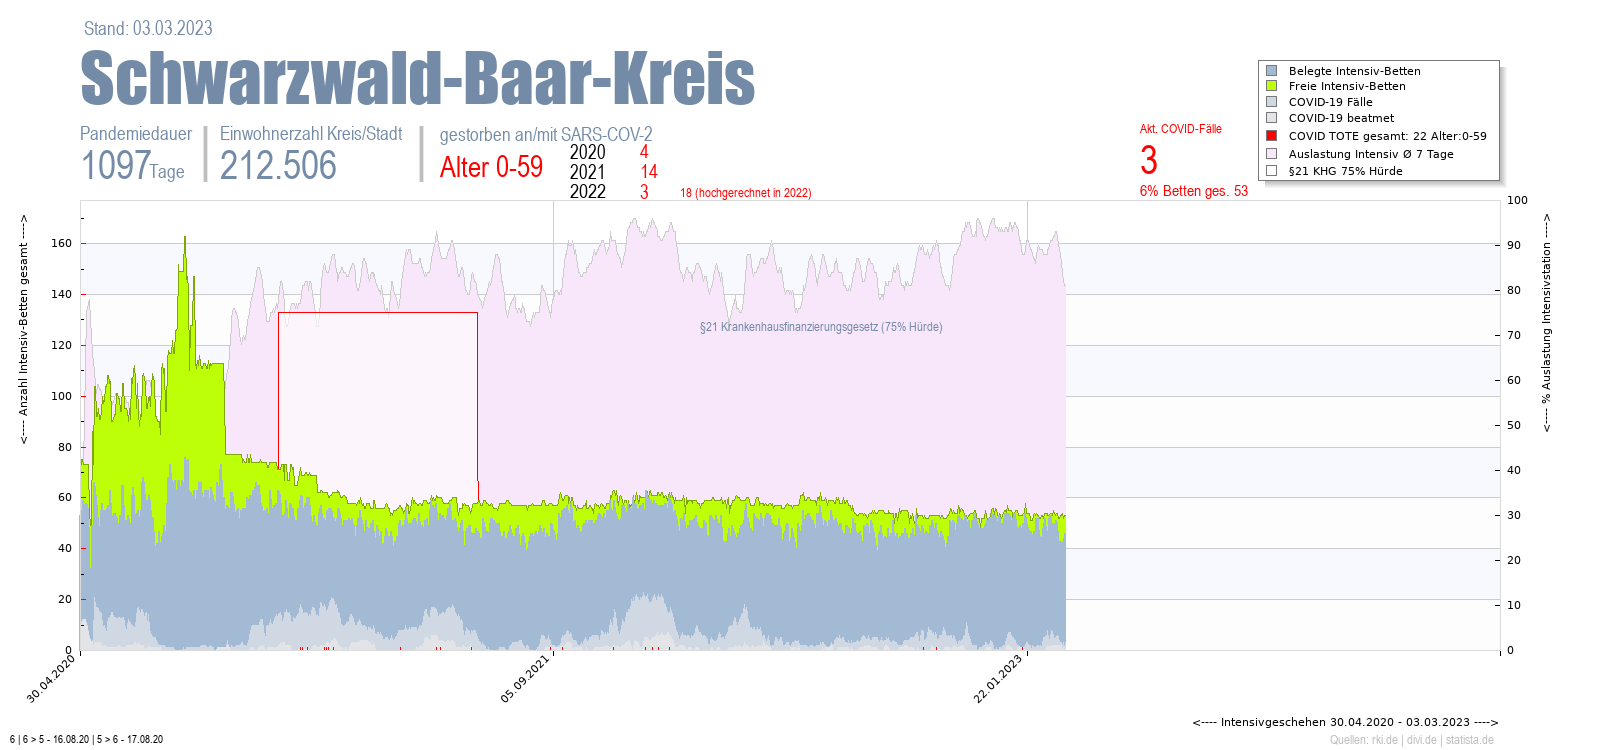 Intensivstation Auslastung Schwarzwald-Baar-Kreis Alter 0-59